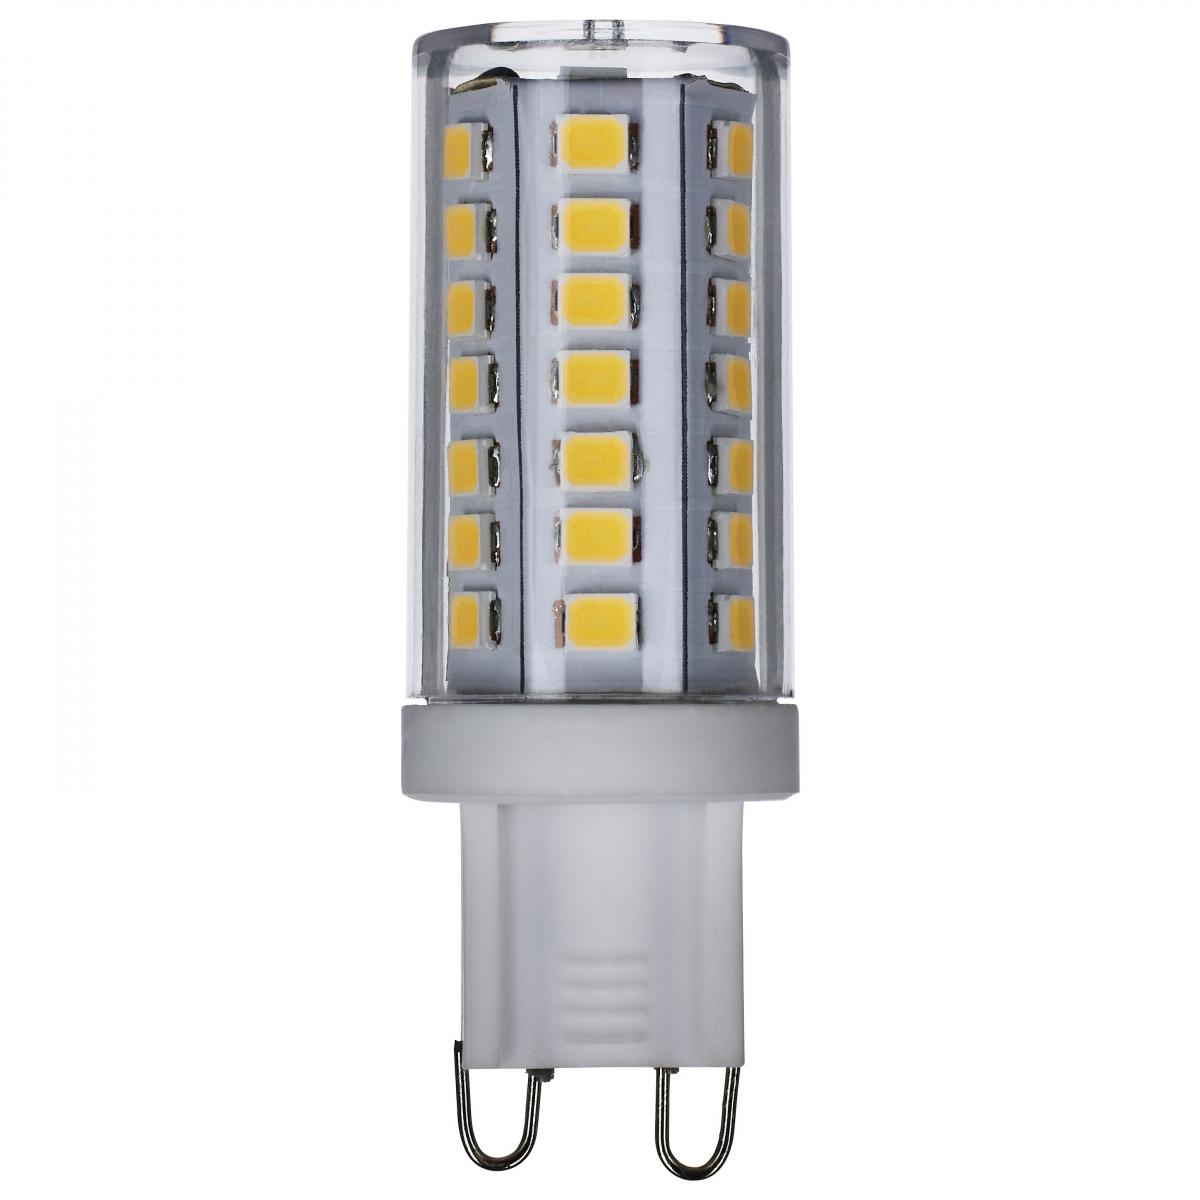 Satco 5W 120V JCD G9 LED 2700K Warm White 500Lm Light Bulb - 40w Equiv.